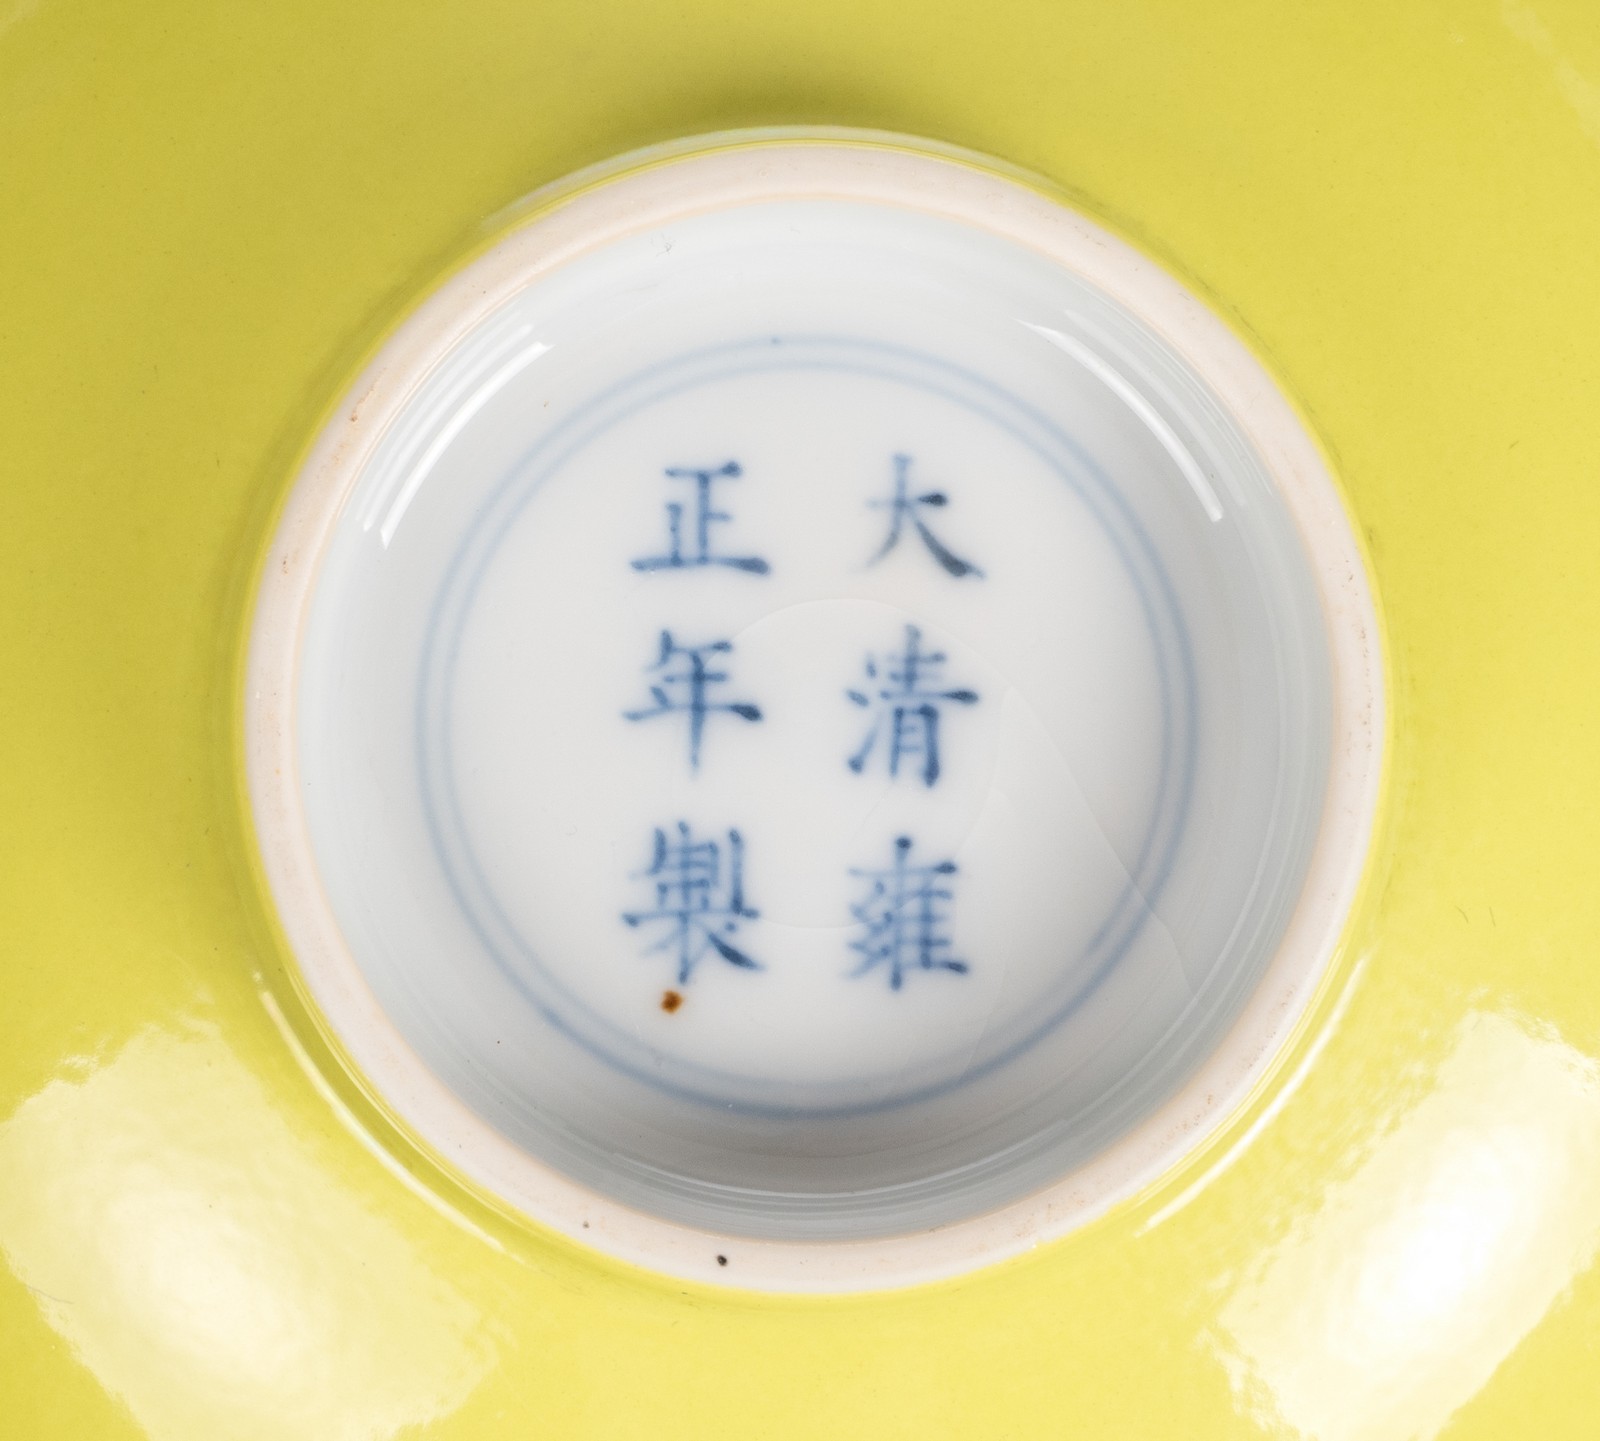 A Chinese green lemon monochrome bowl, marked Yongzheng, Qing dynasty, H 6,5 - Diameter 14,5 cm ( - Image 7 of 8